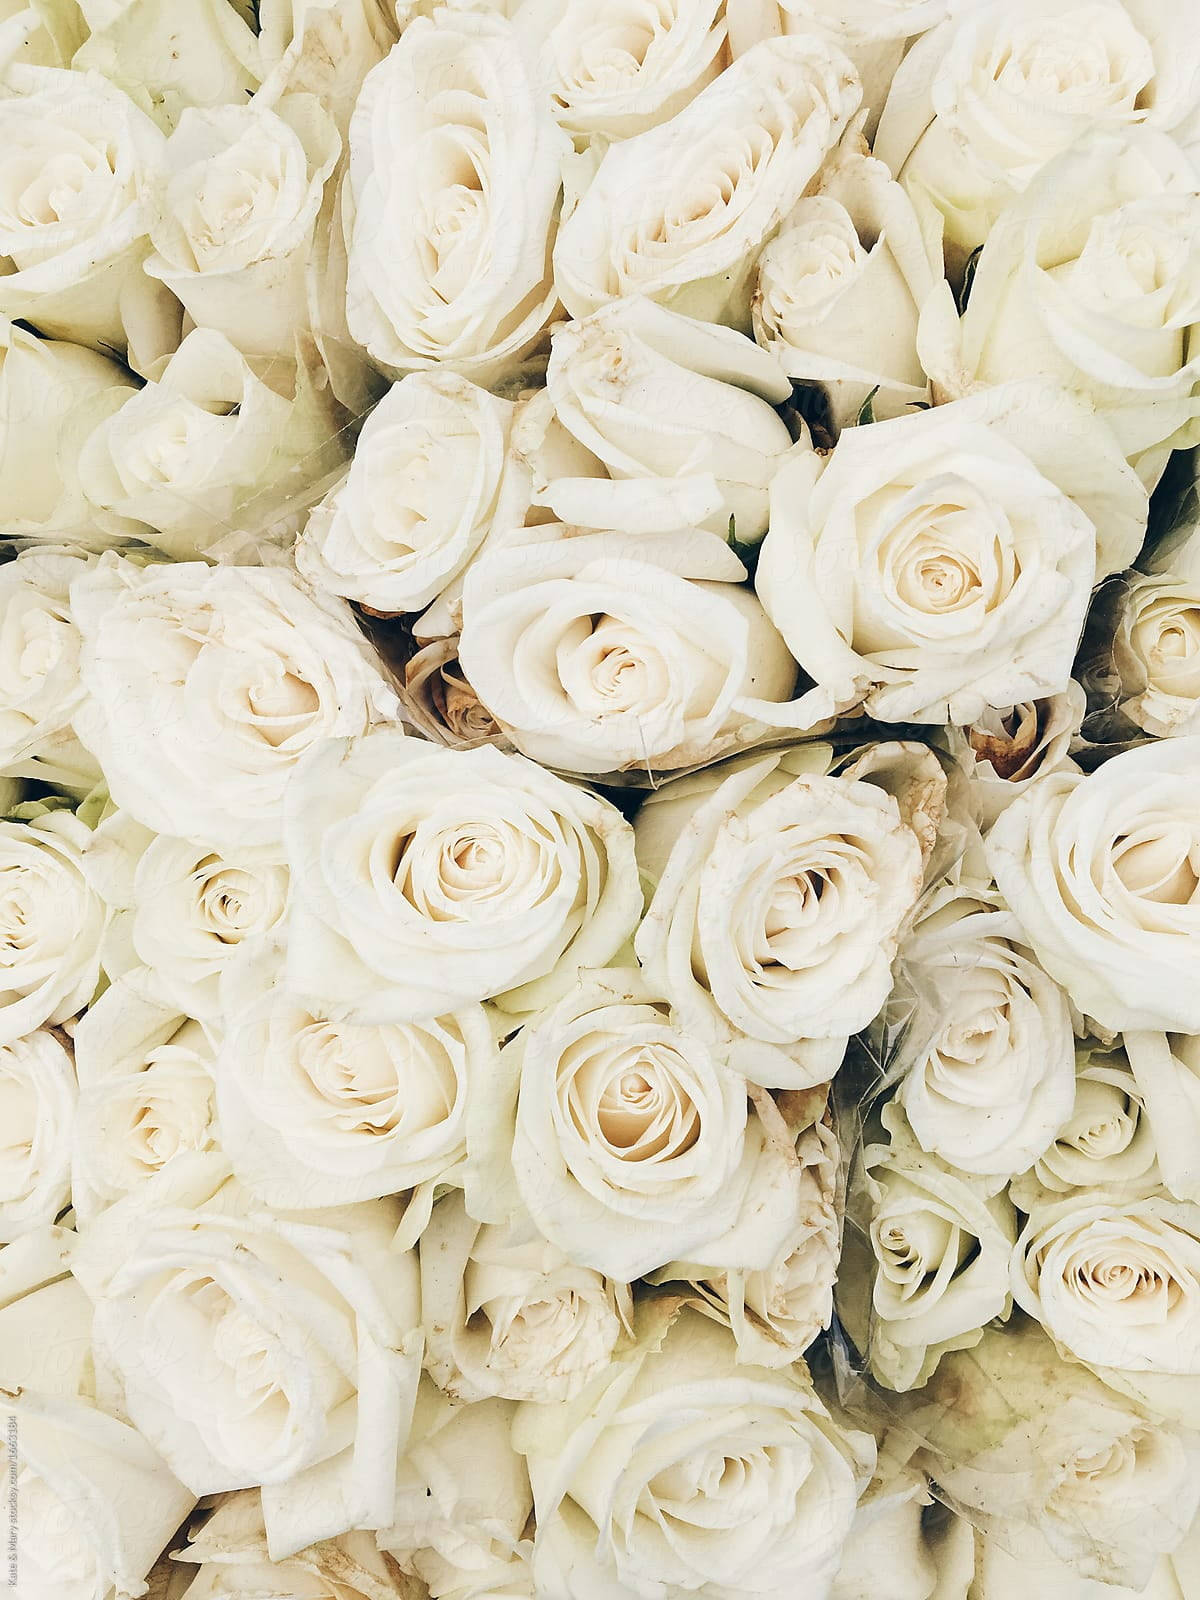 Cool White Roses Closeup Wallpaper